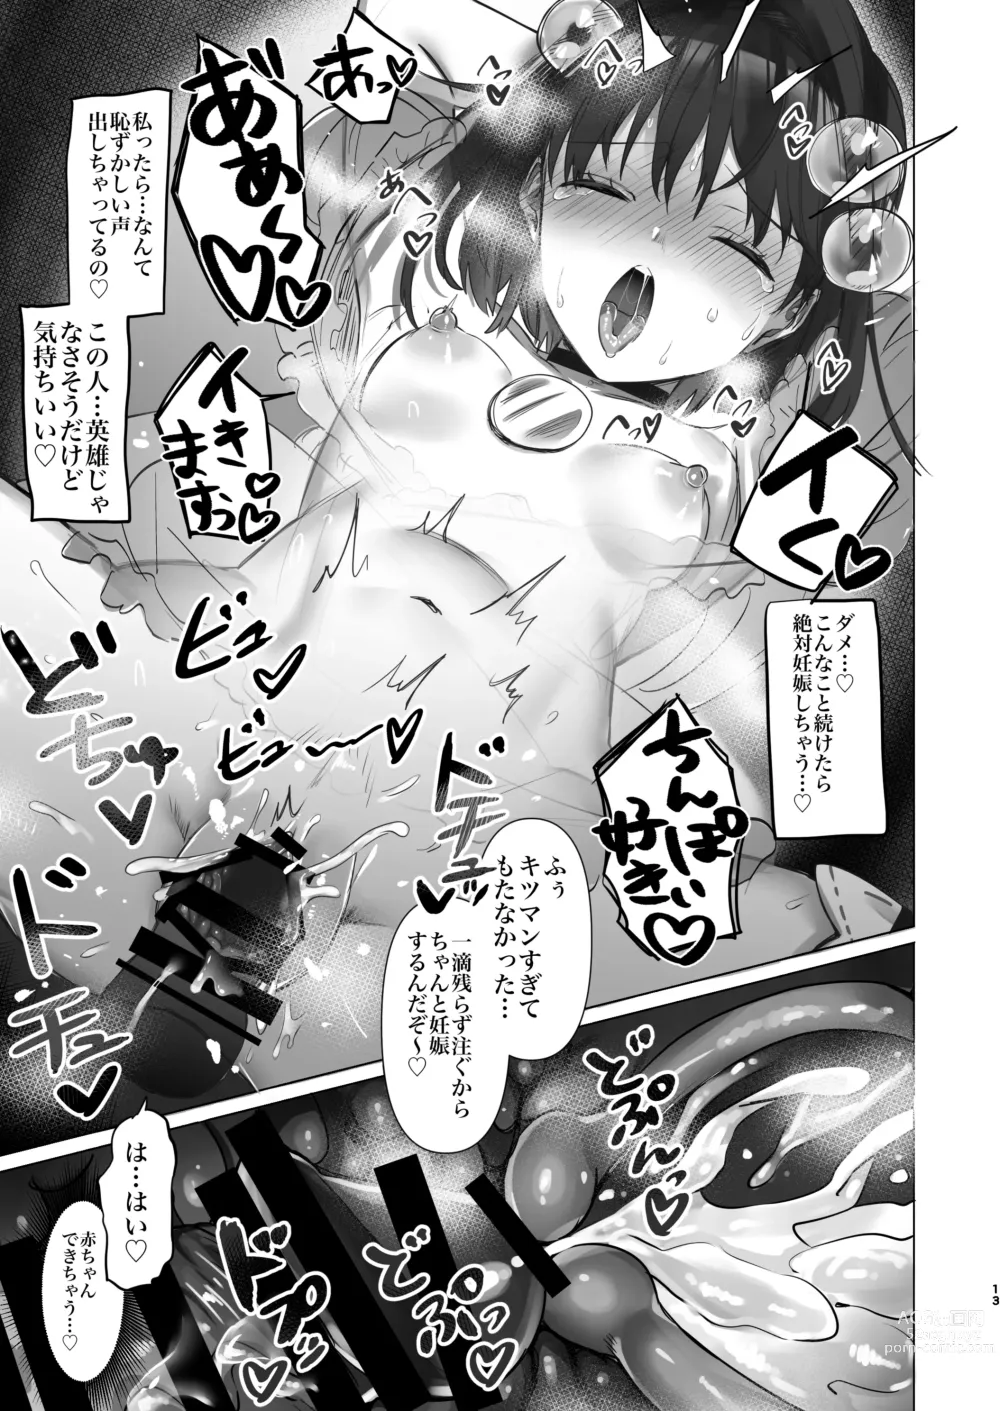 Page 13 of doujinshi Eiyuu wa kou sagase